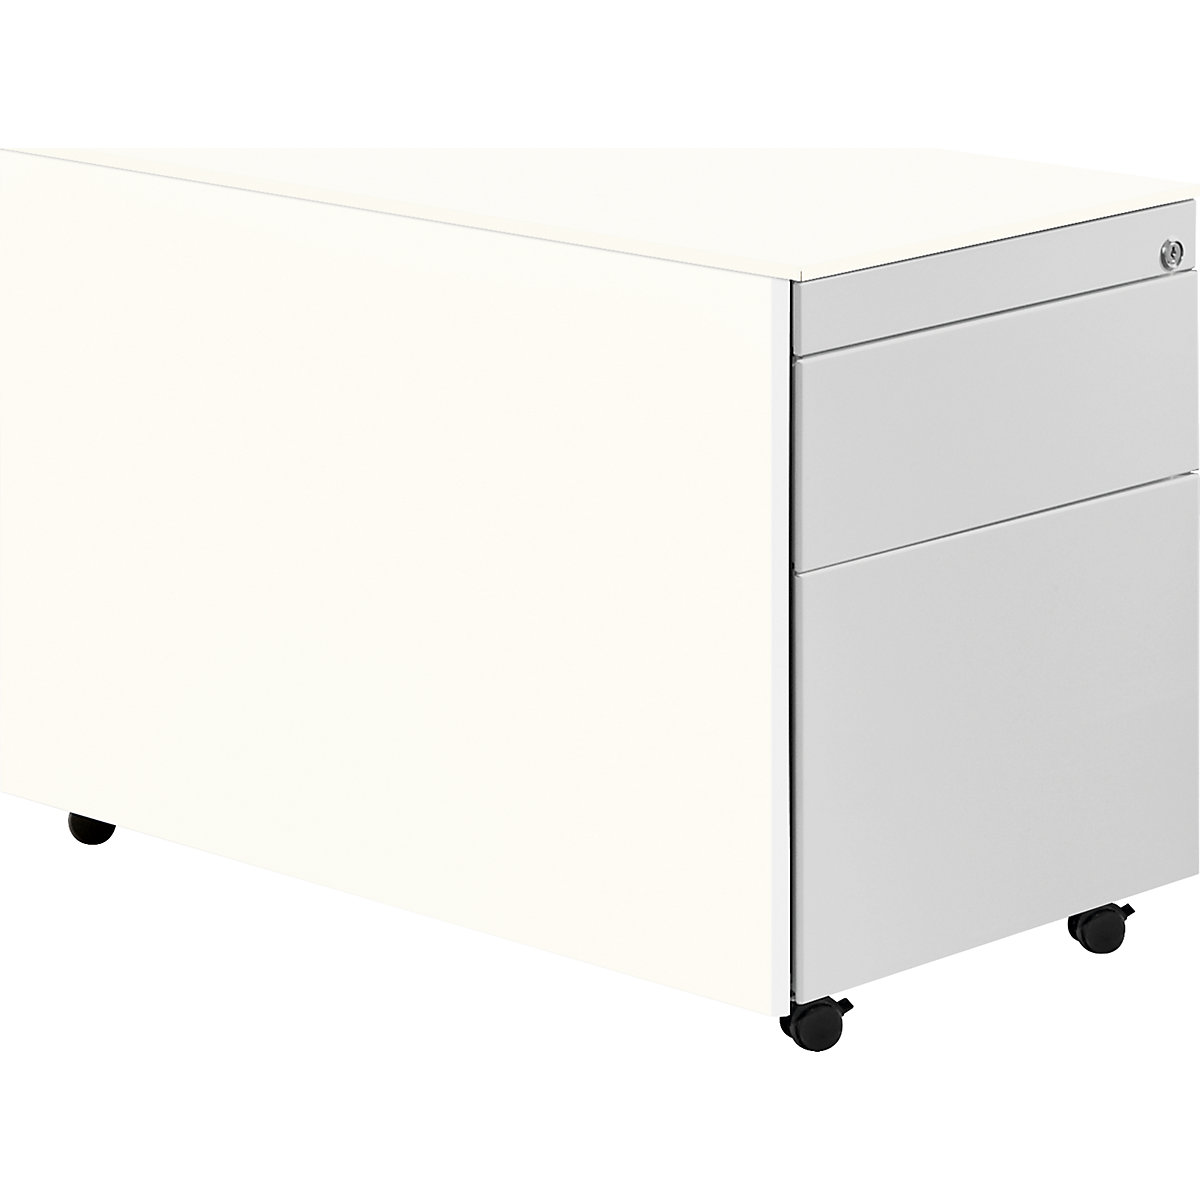 Drawer pedestal with castors – mauser, HxD 570 x 800 mm, 1 drawer, 1 suspension file drawer, pure white / white aluminium / white-6